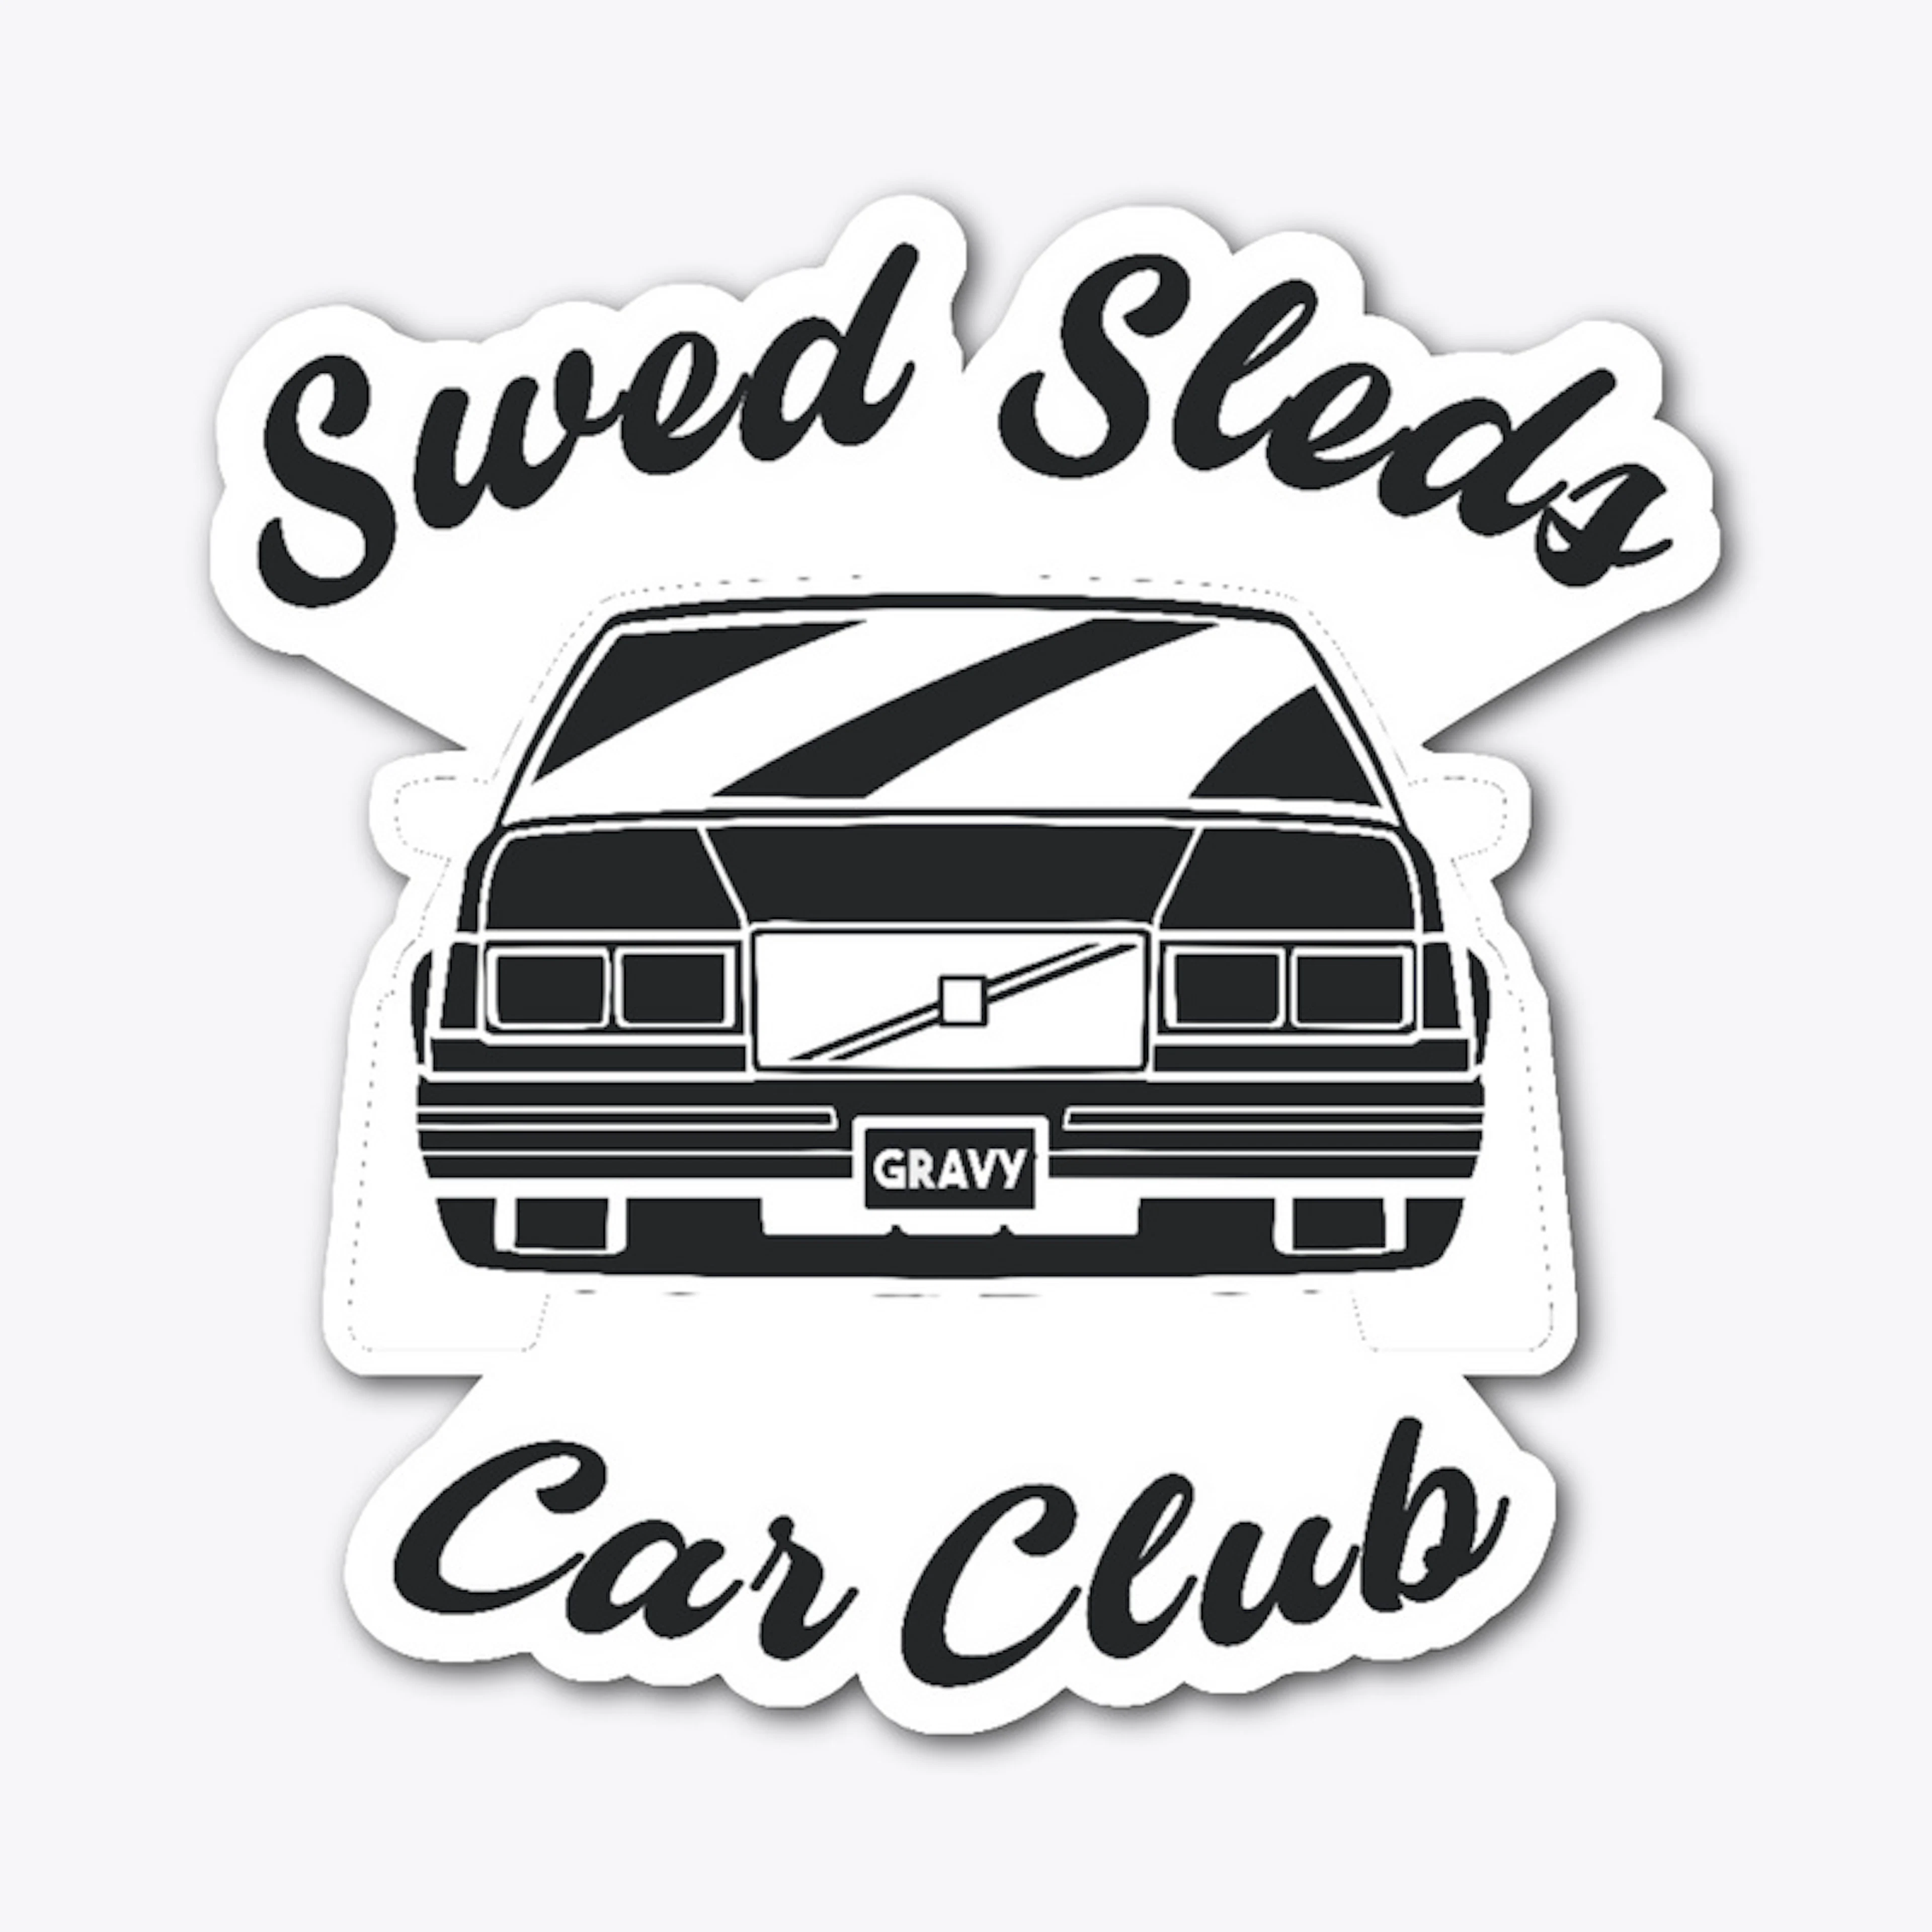 SWED SLEDS CAR CLUB